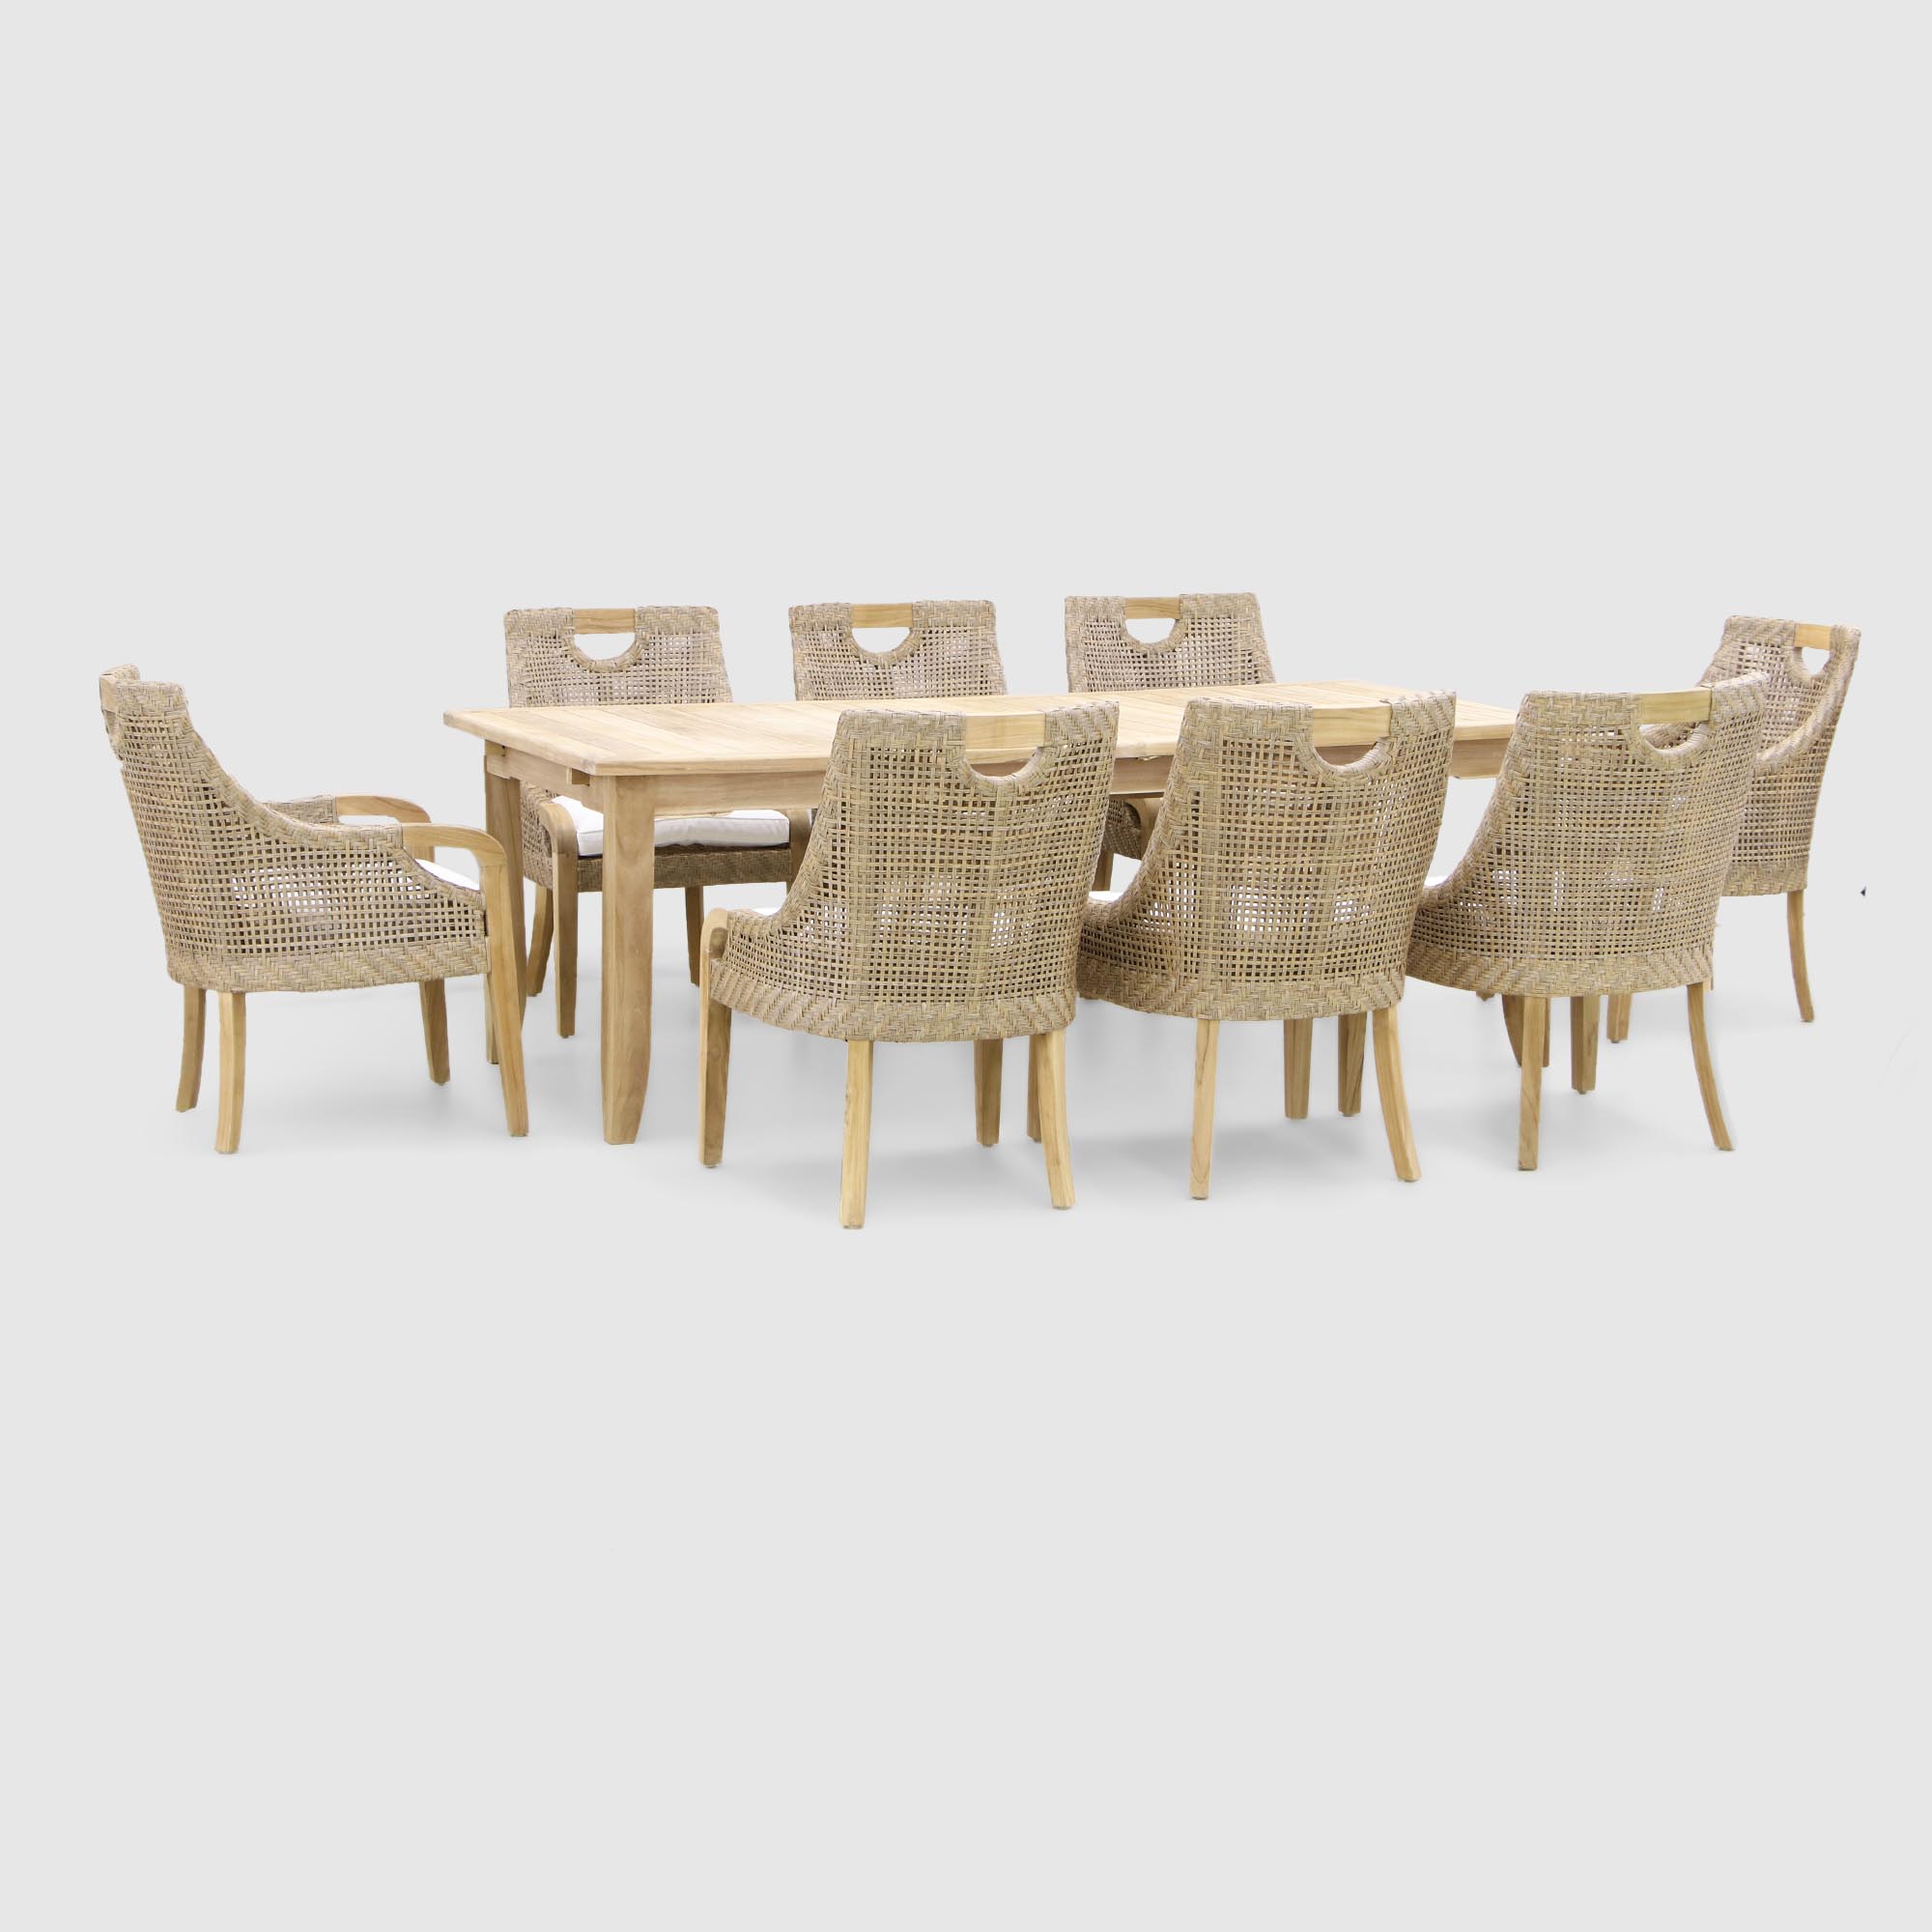 Комплект мебели Jepara curved из 9 предметов (101), цвет светло-коричневый, размер 60х60х90 - фото 1